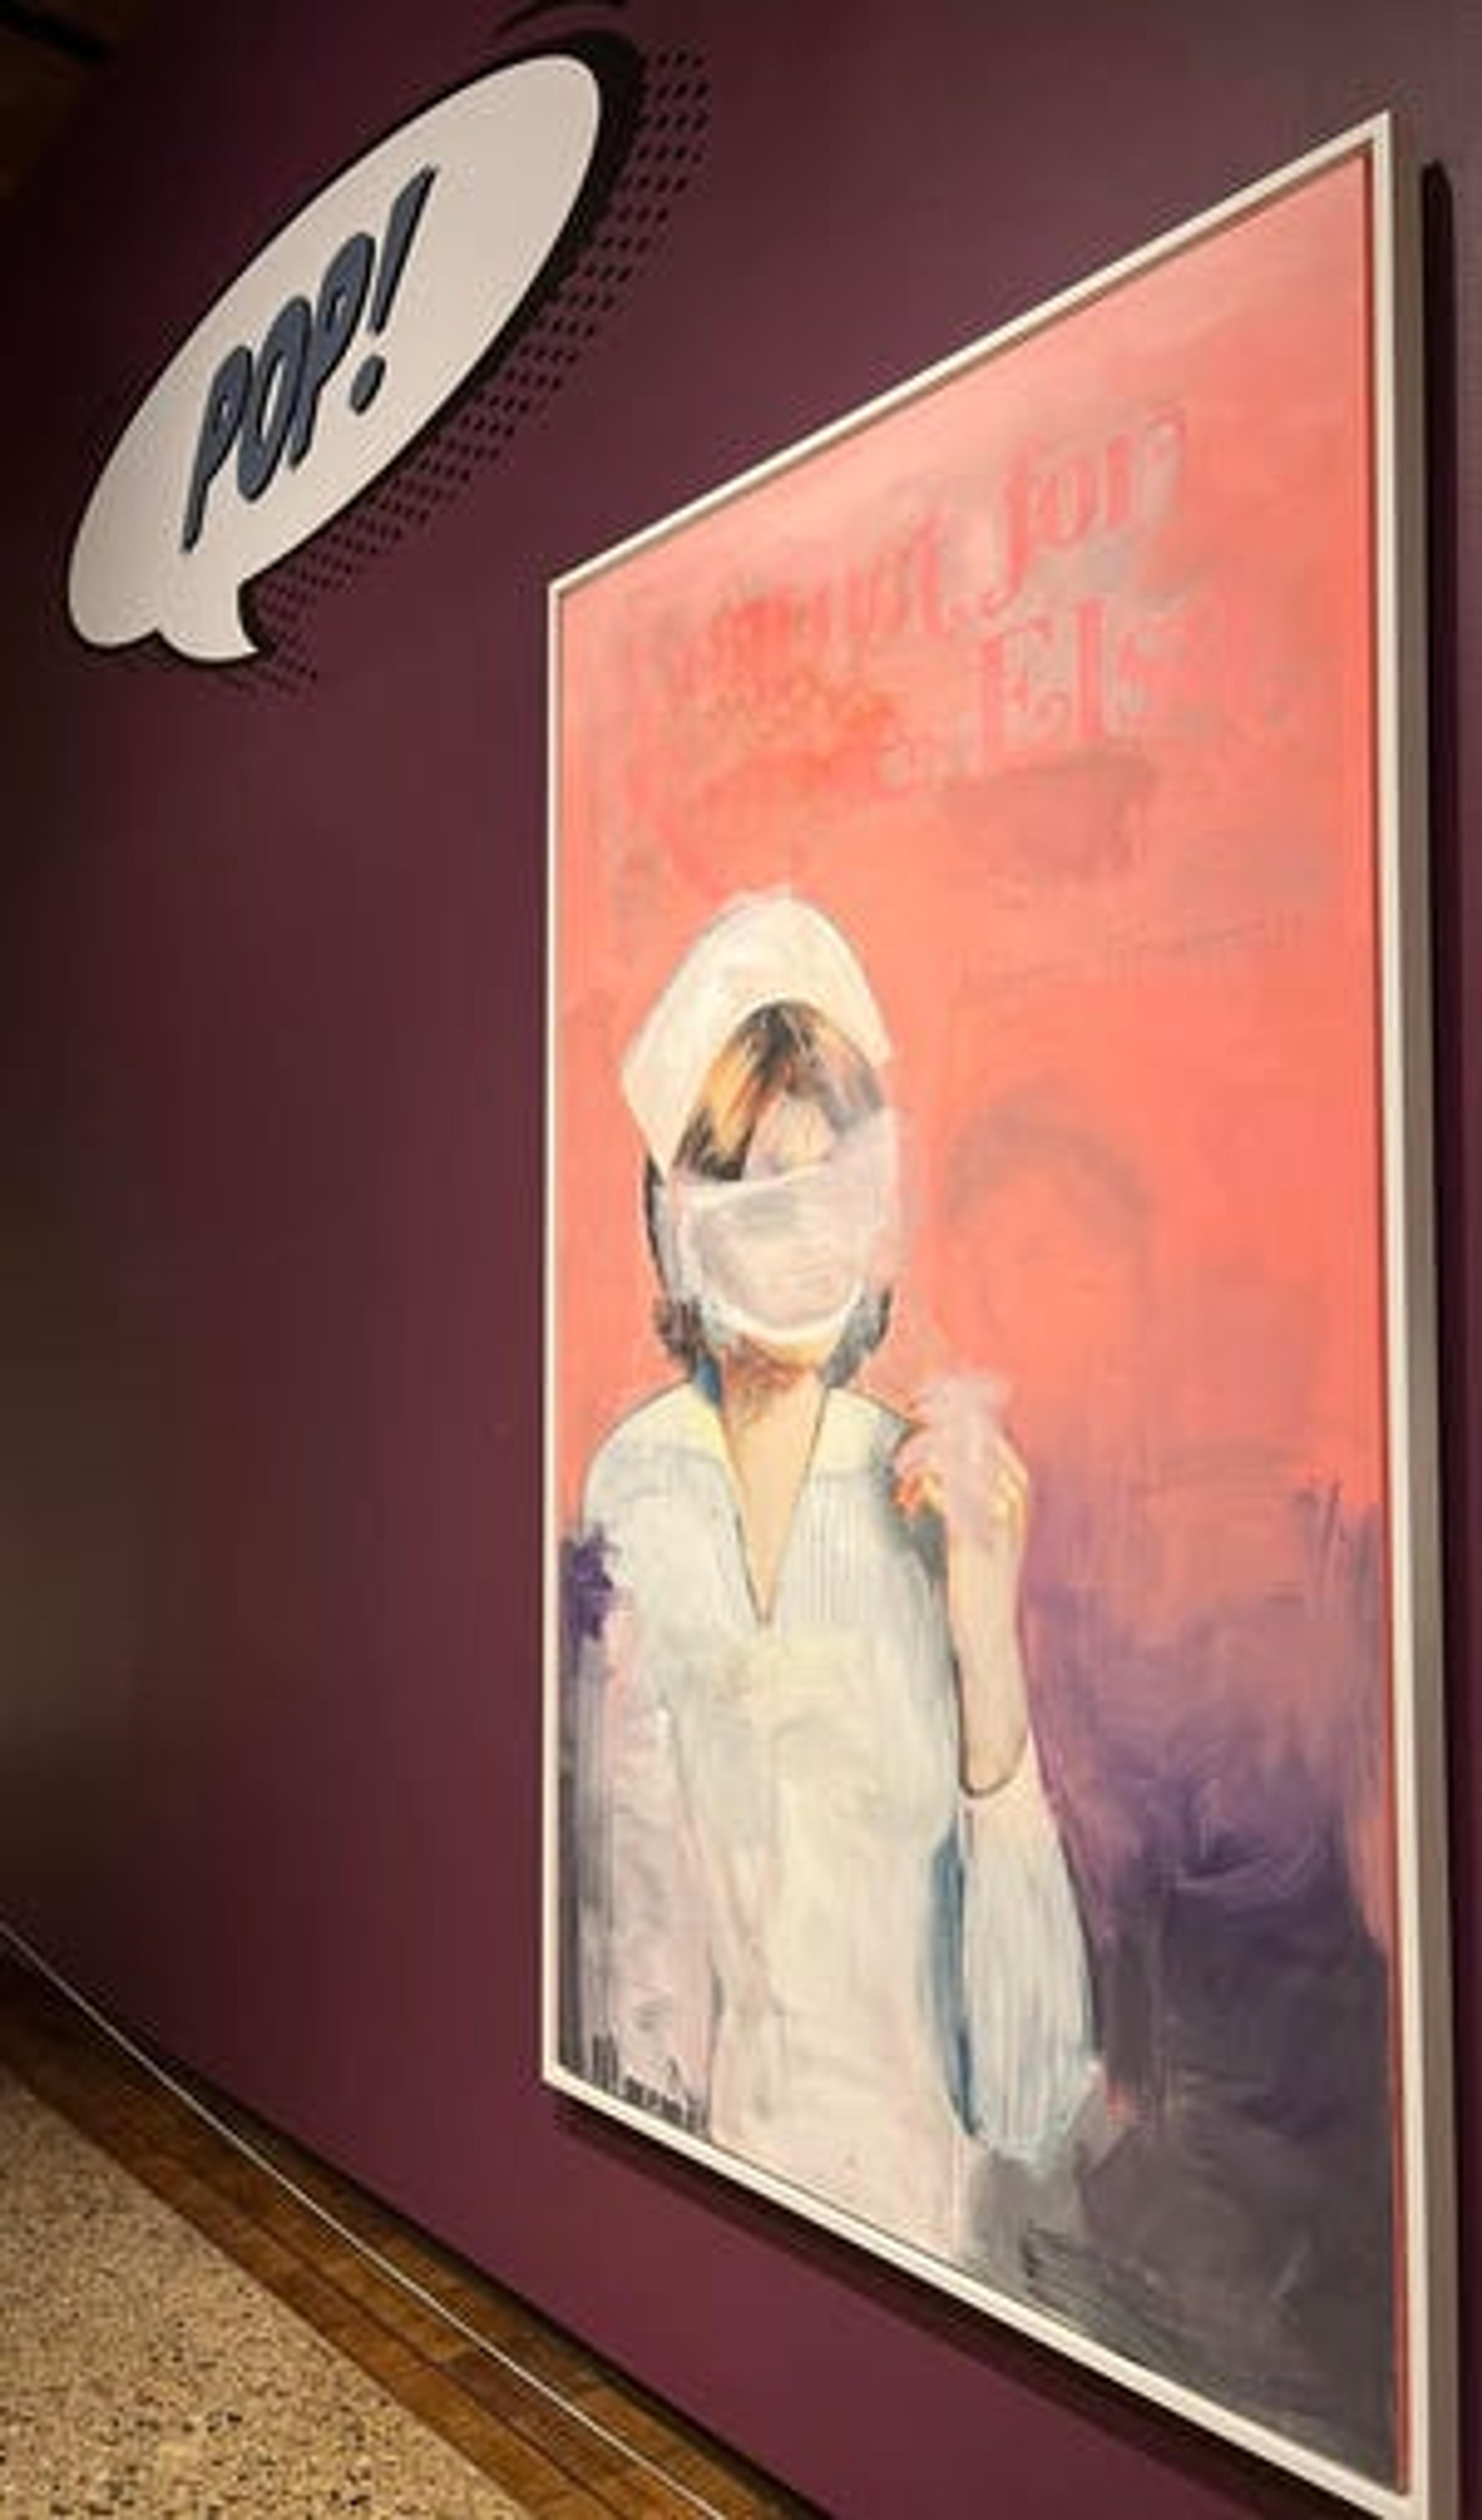 Richard Prince's "Nurse Elsa" displayed as part of the "Pop!" exhibition